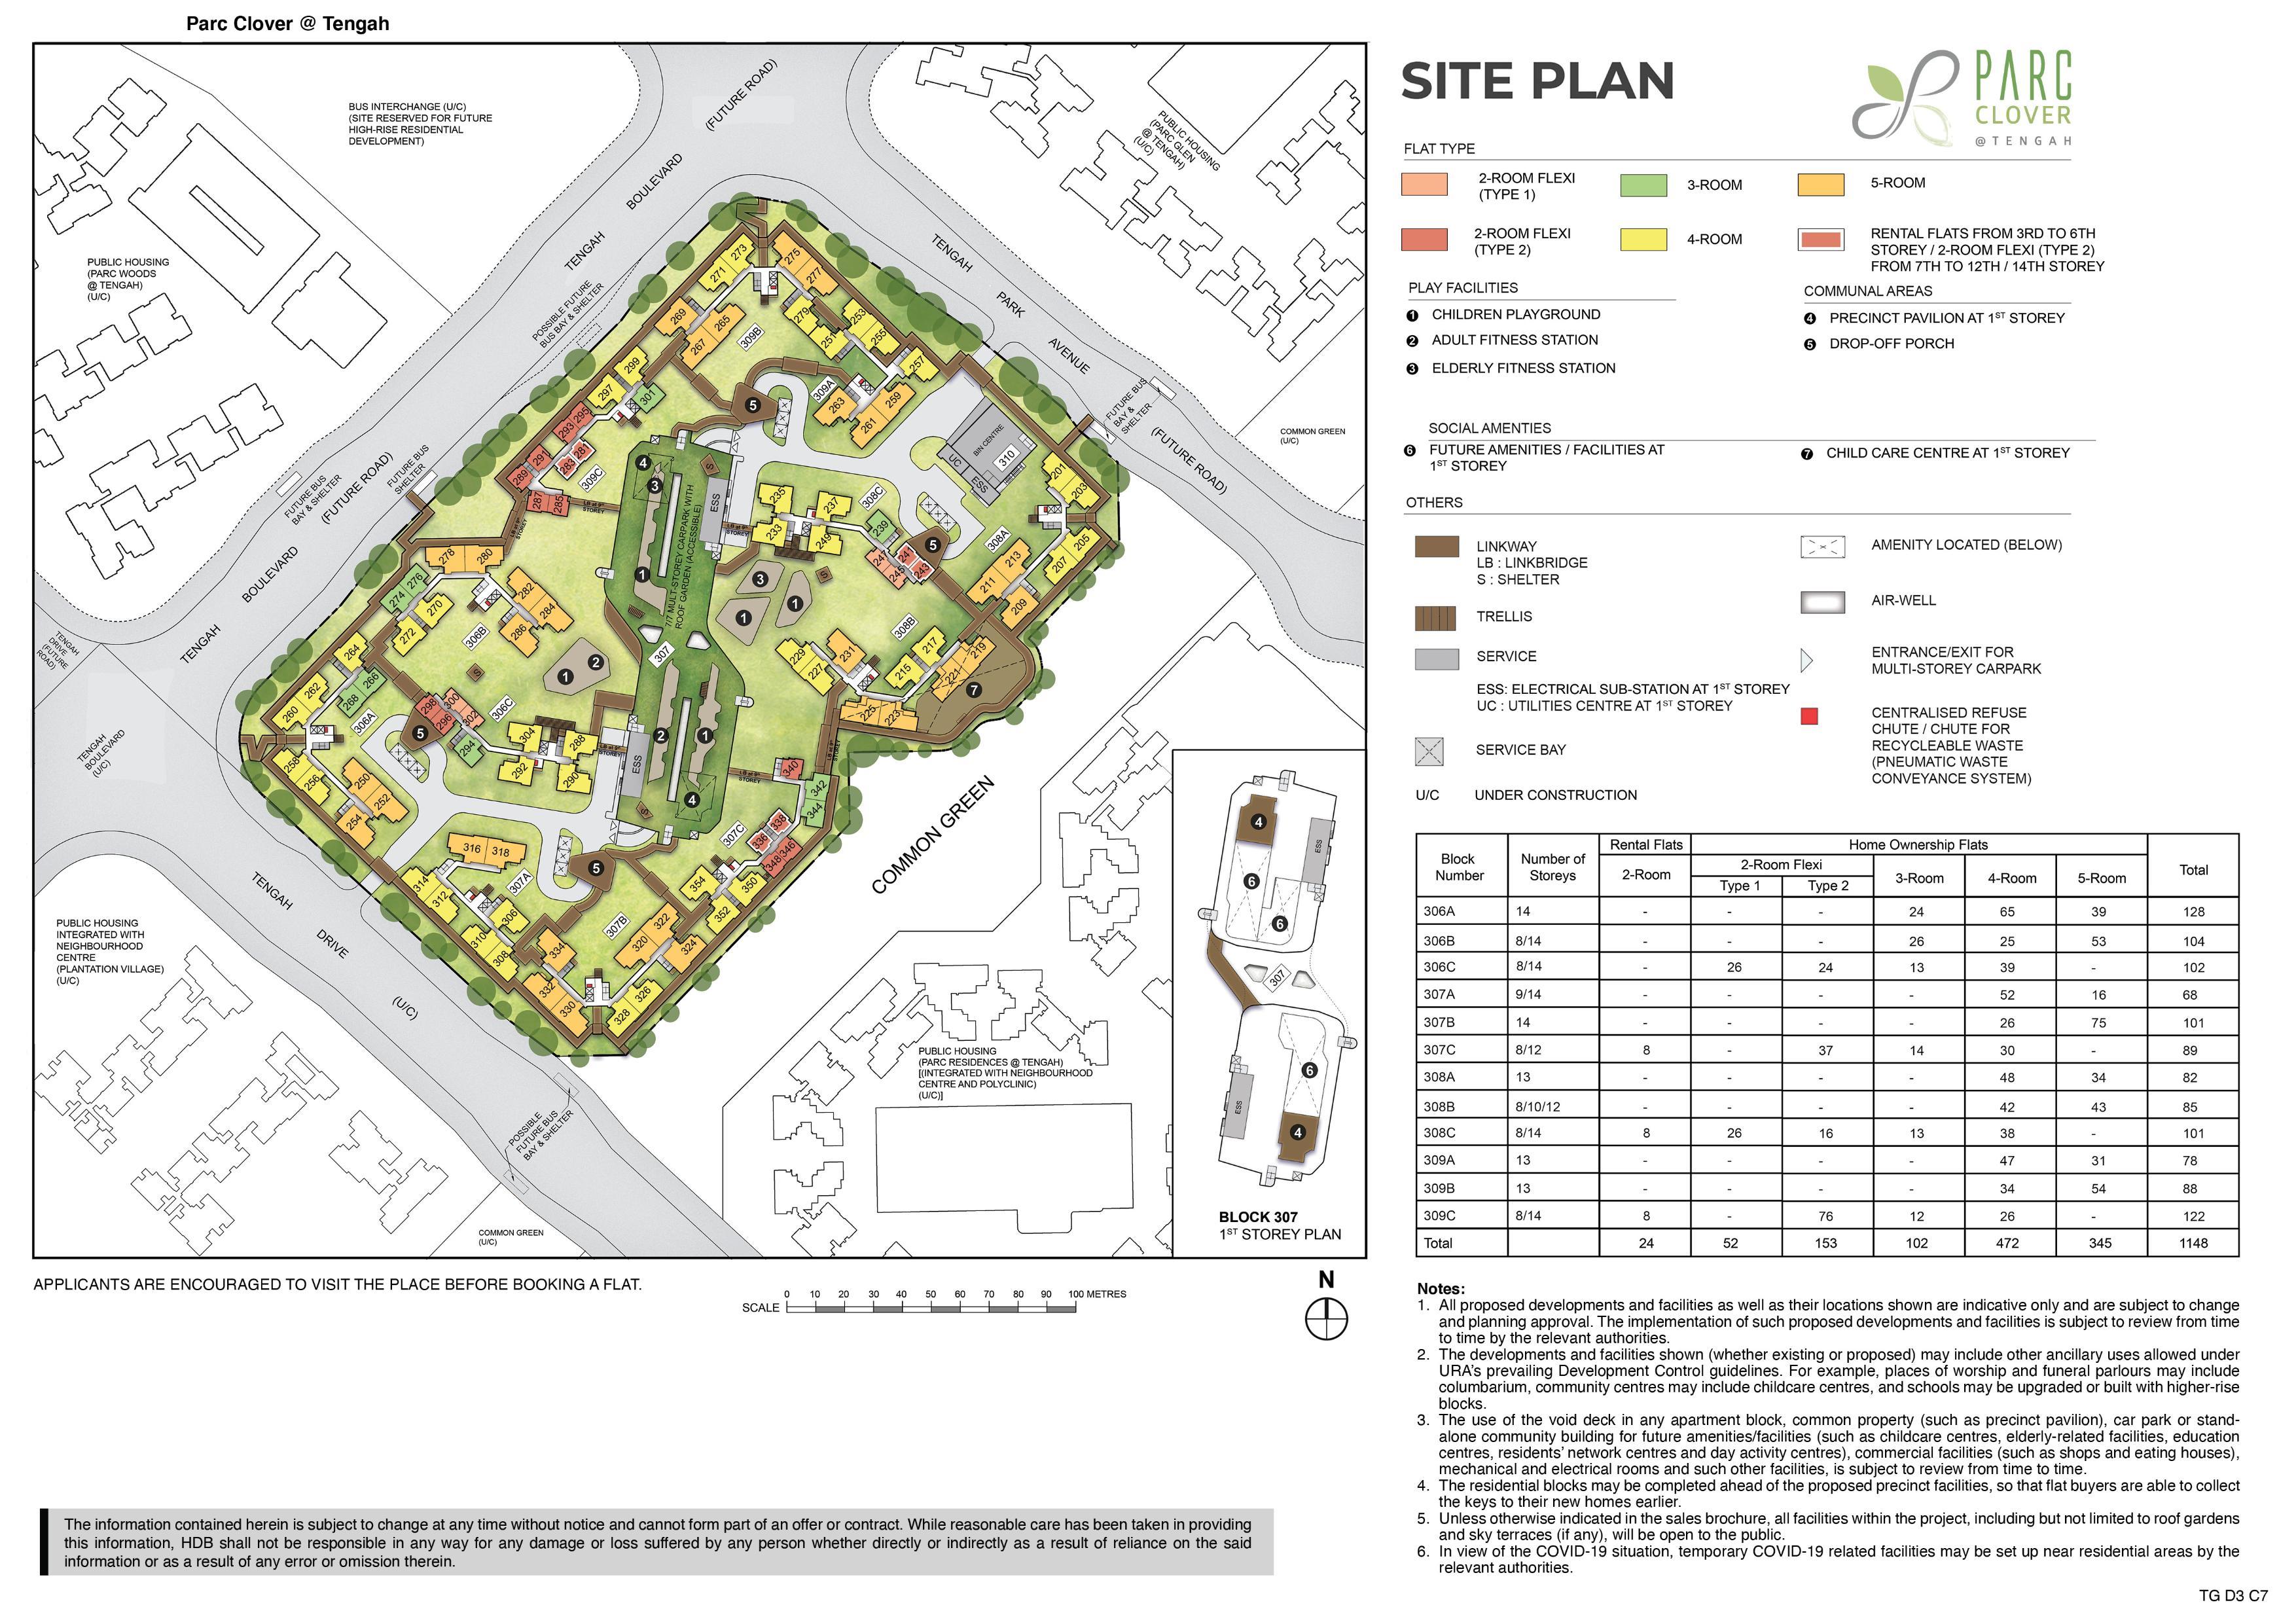 Parc Clover @ Tengah Site Plan